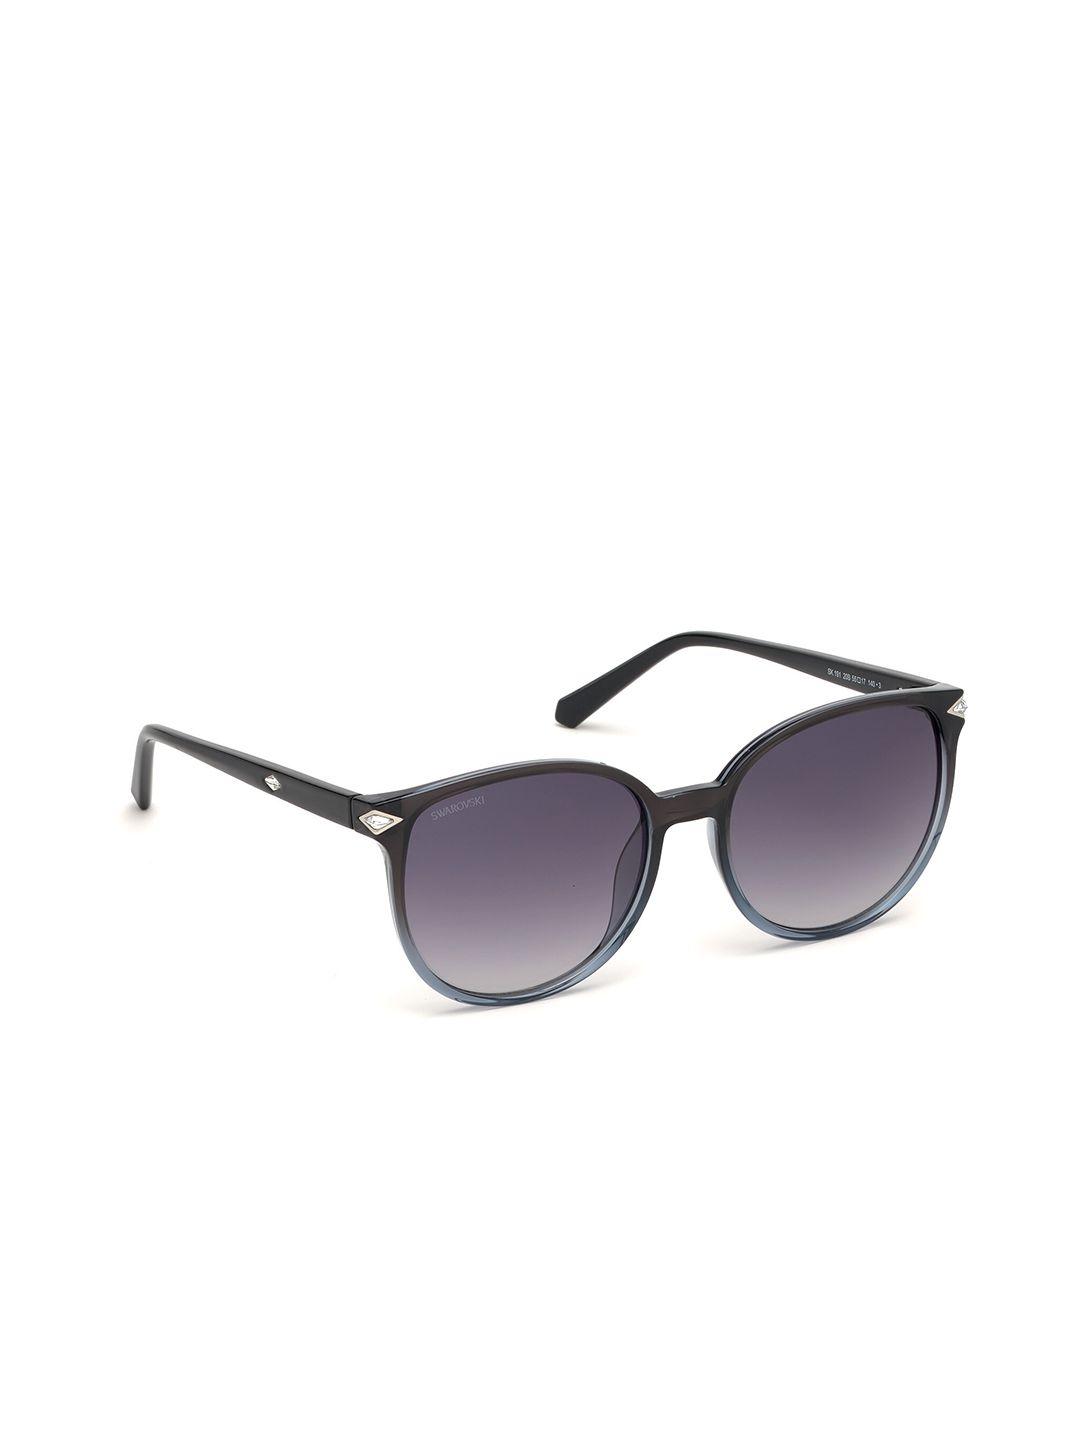 swarovski women round sunglasses with uv protected lens - sk0191 55 20b